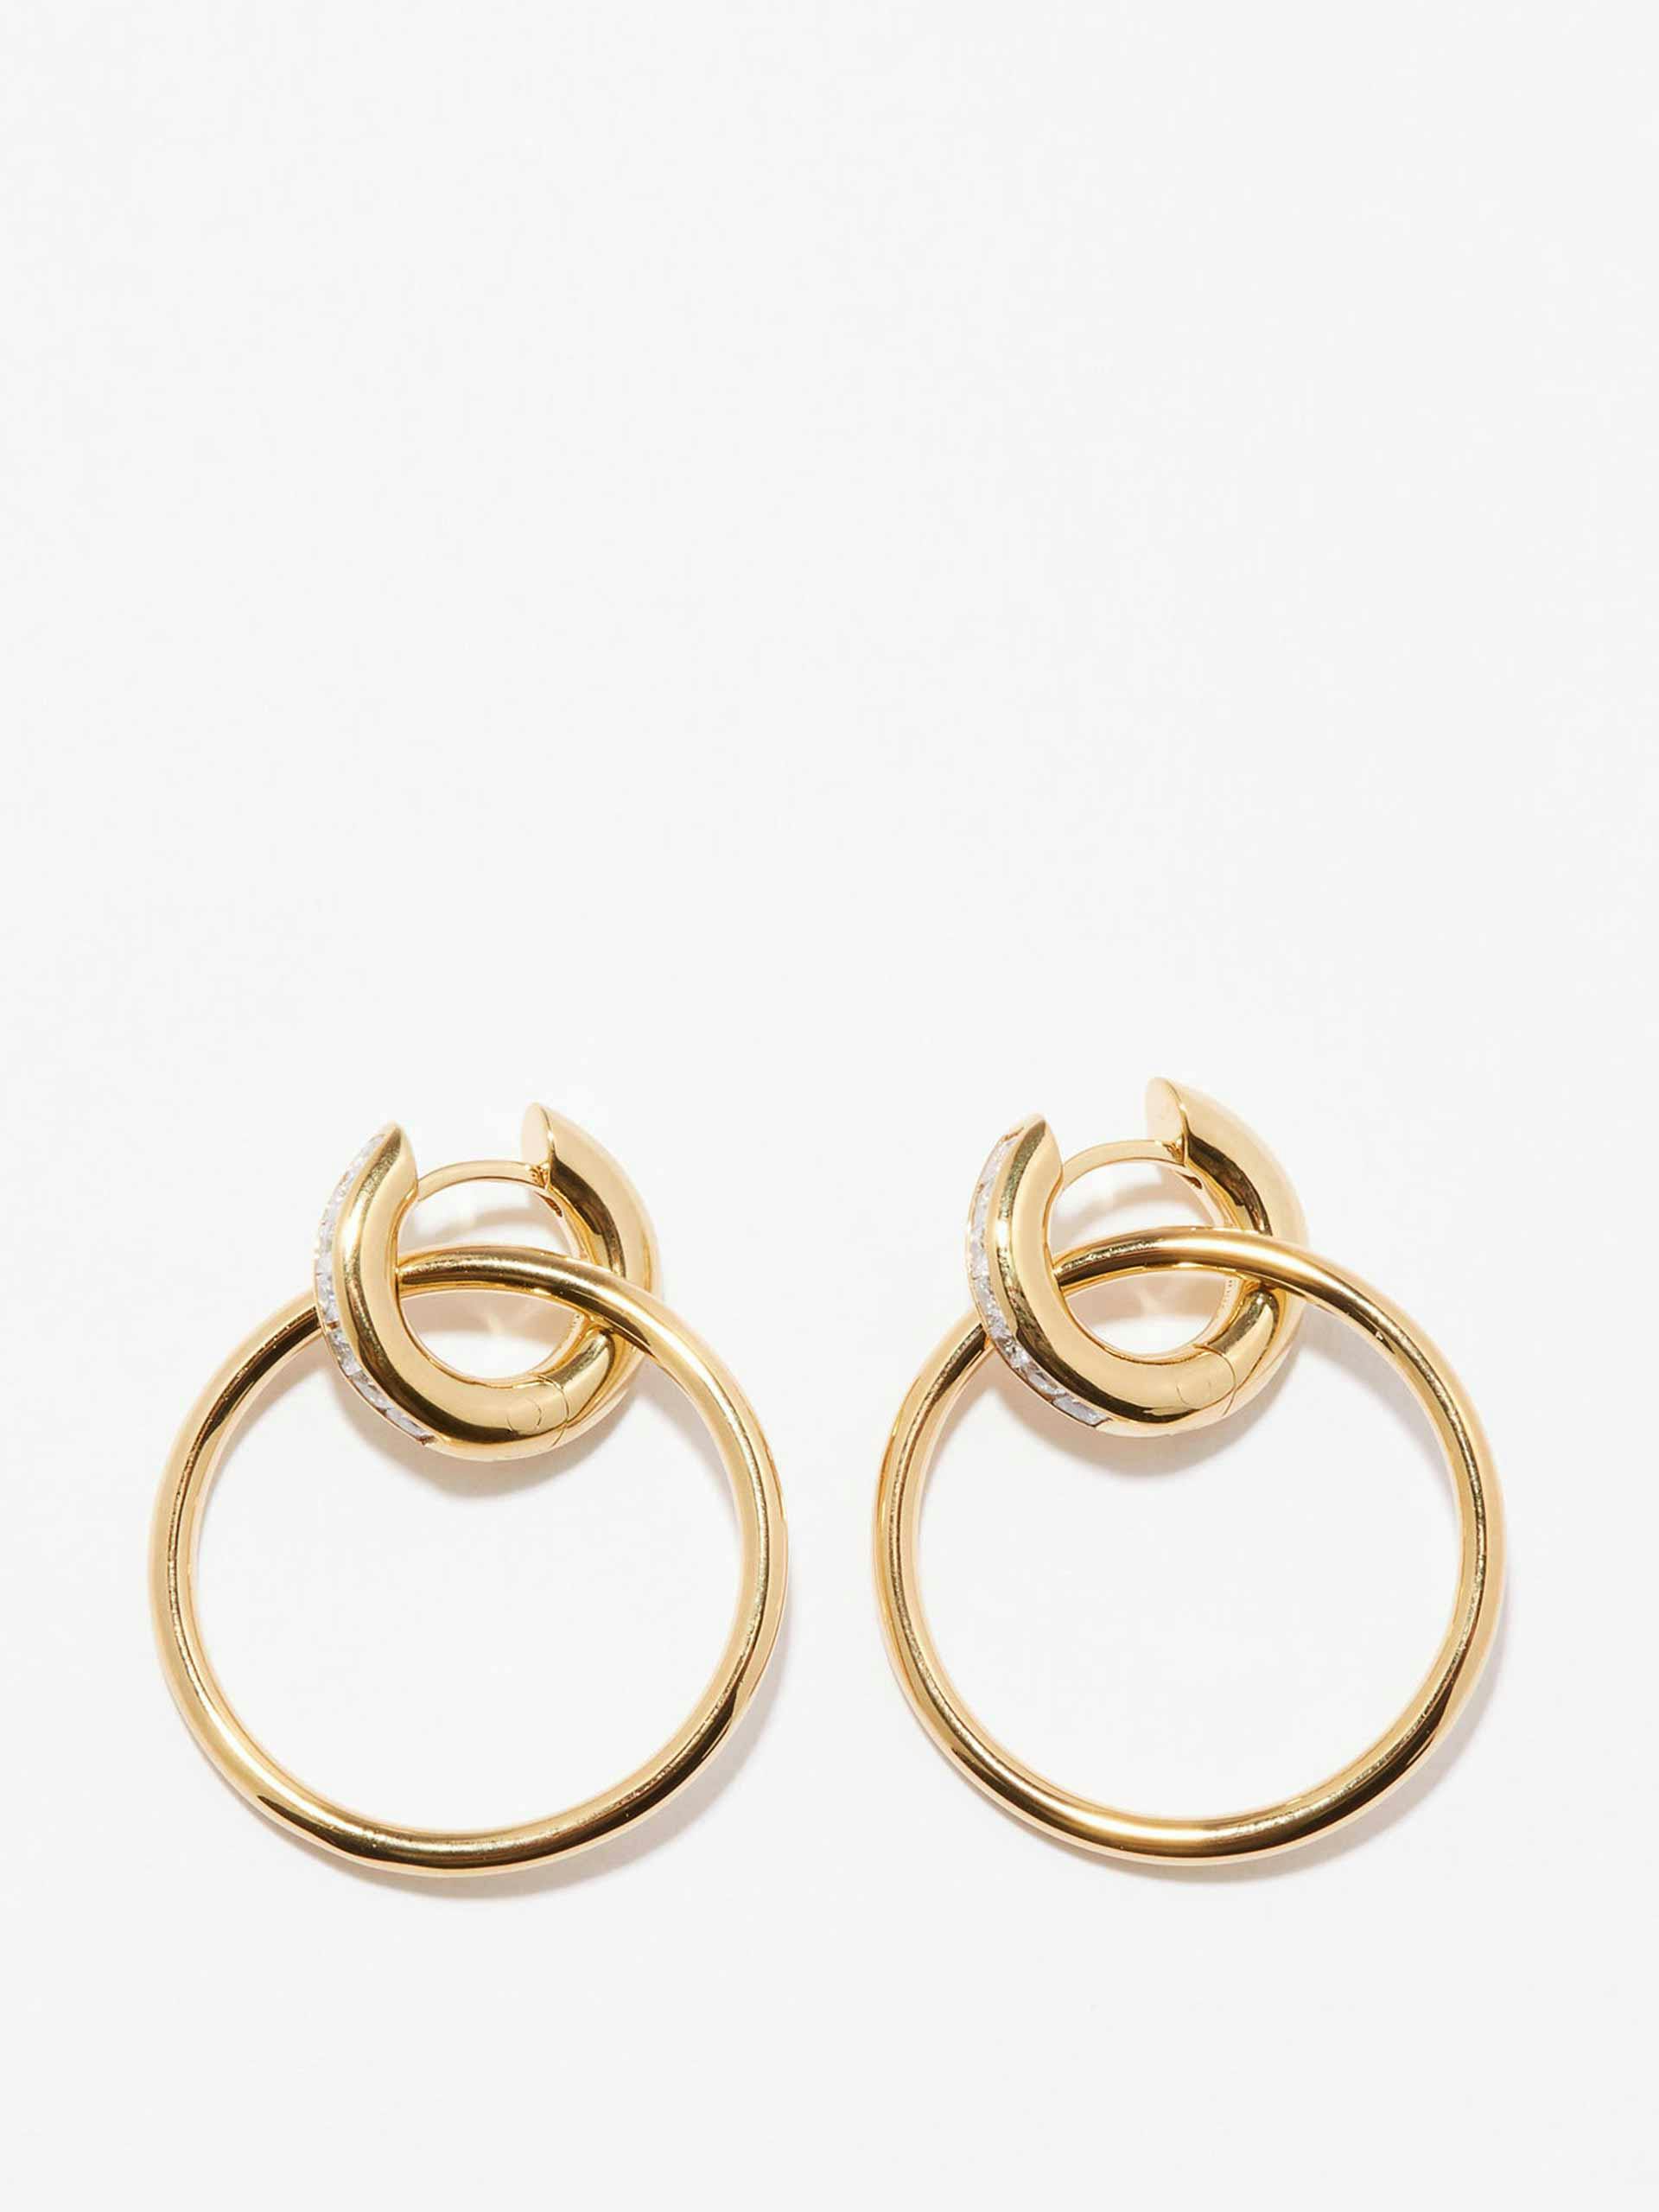 Earrings with detachable hoops